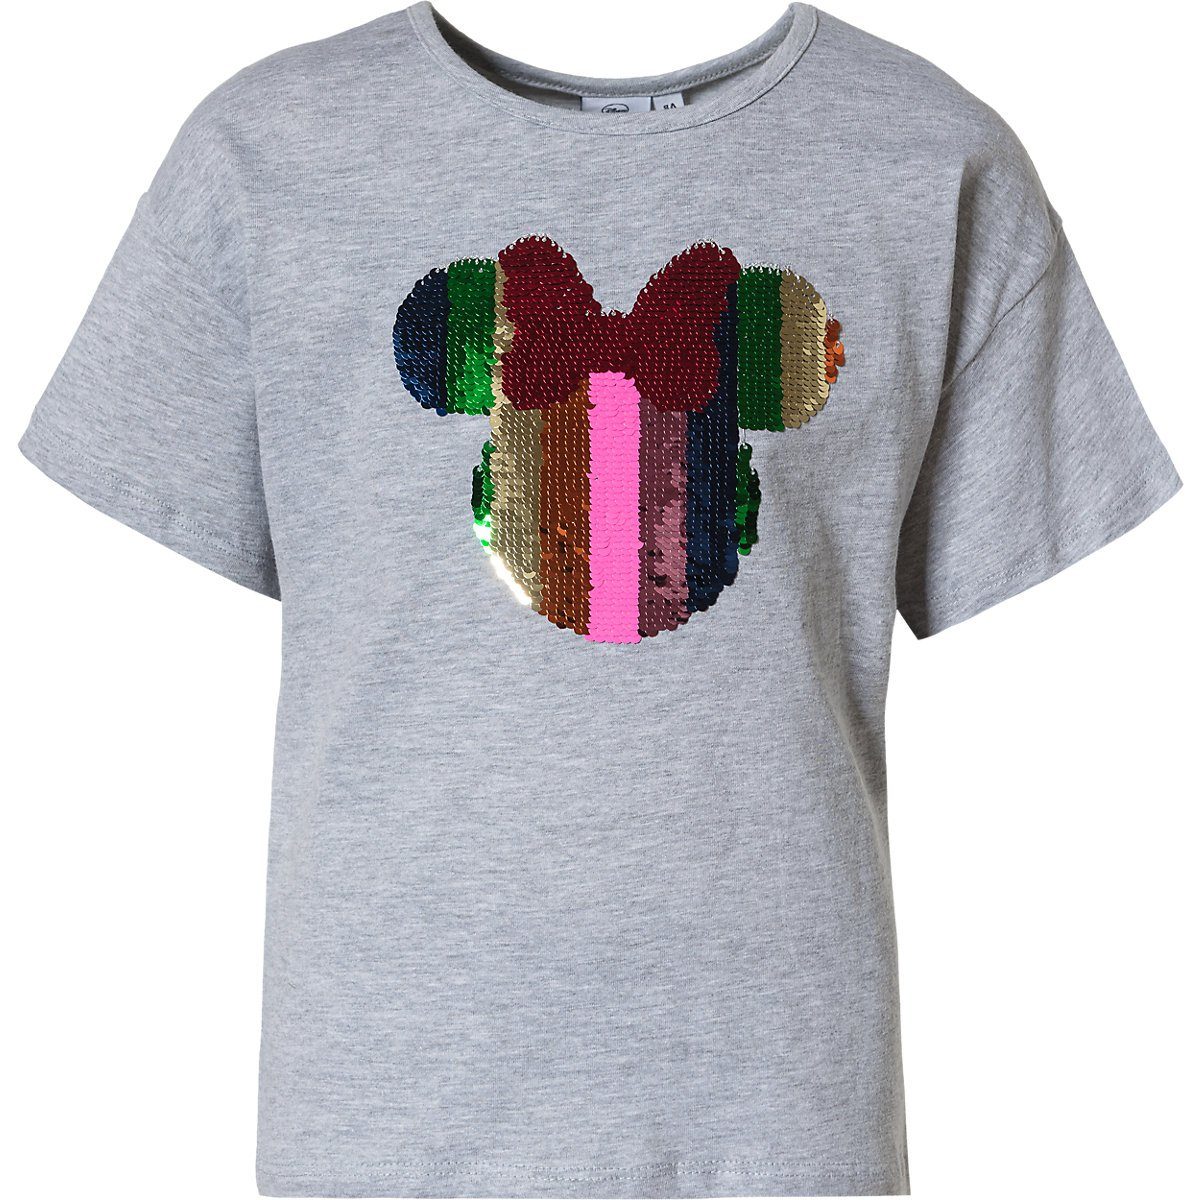 Kinder Kids (Gr. 92 -146) Disney Minnie Mouse T-Shirt Disney Minnie Mouse T-Shirt mit Pailletten für